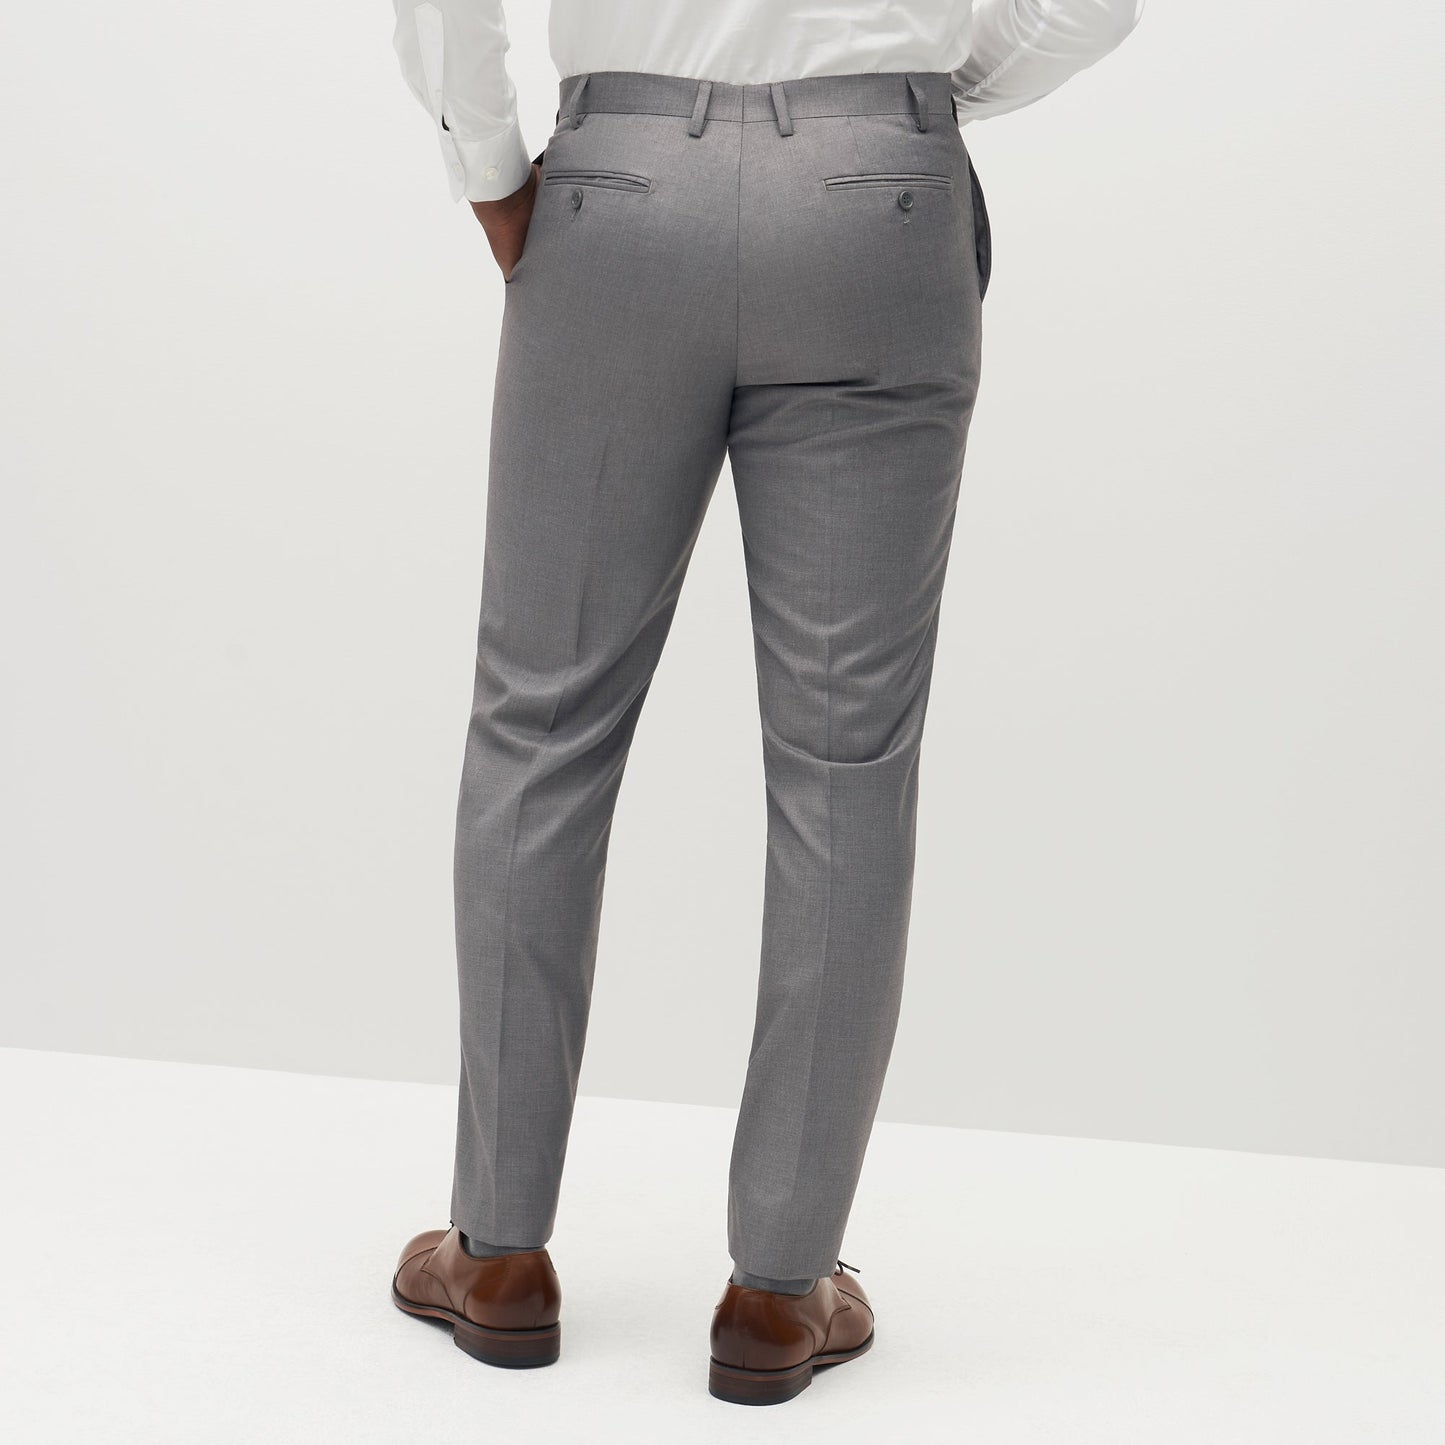 Textured Gray Suit Pants (Comfort Stretch) by SuitShop